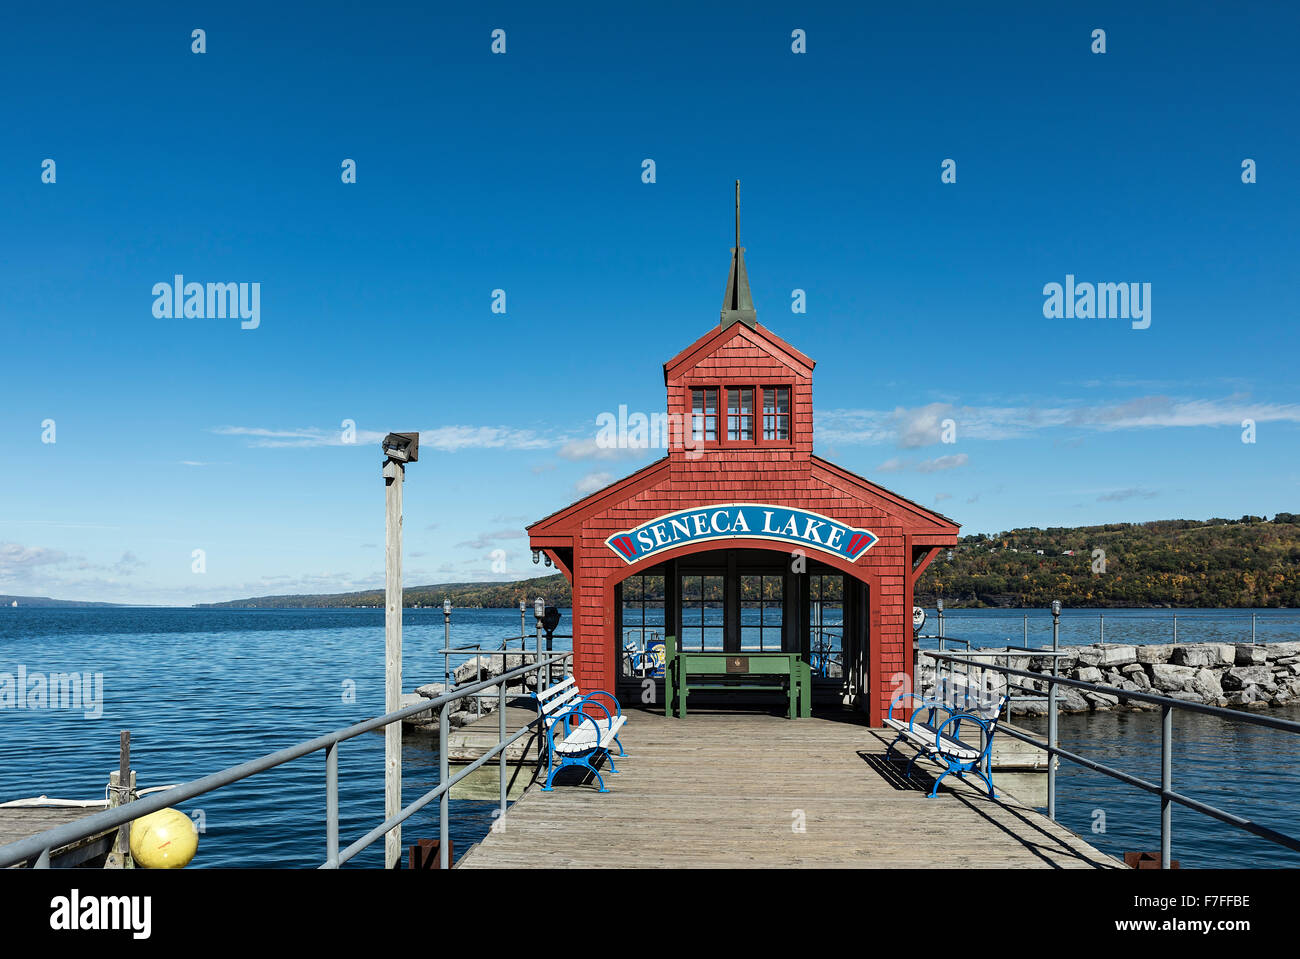 Seneca lake hi-res stock photography and images - Alamy